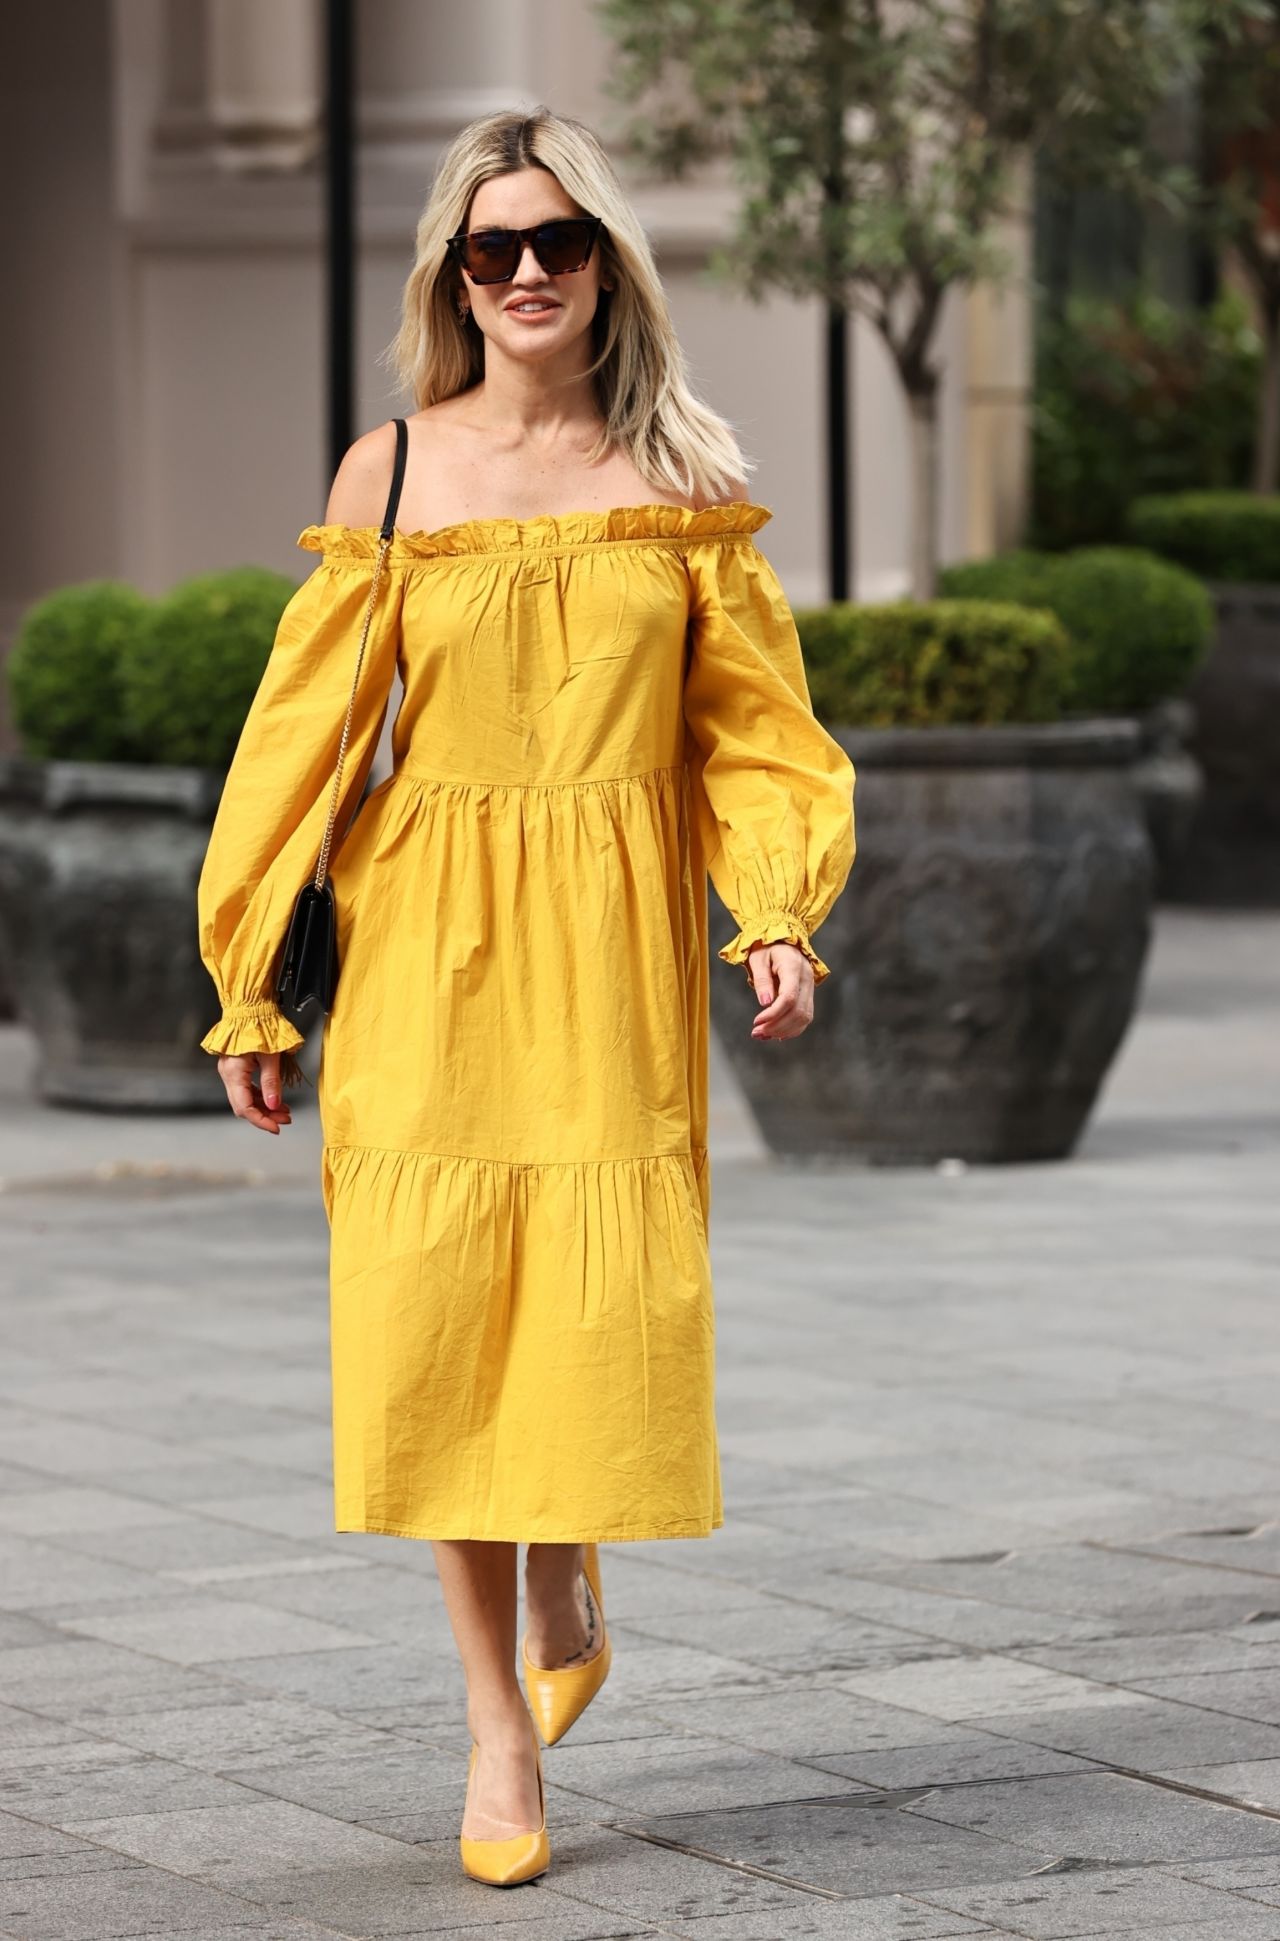 Ashley Roberts in Mustard Yellow River Island Dress - London 07/28/2020 ...